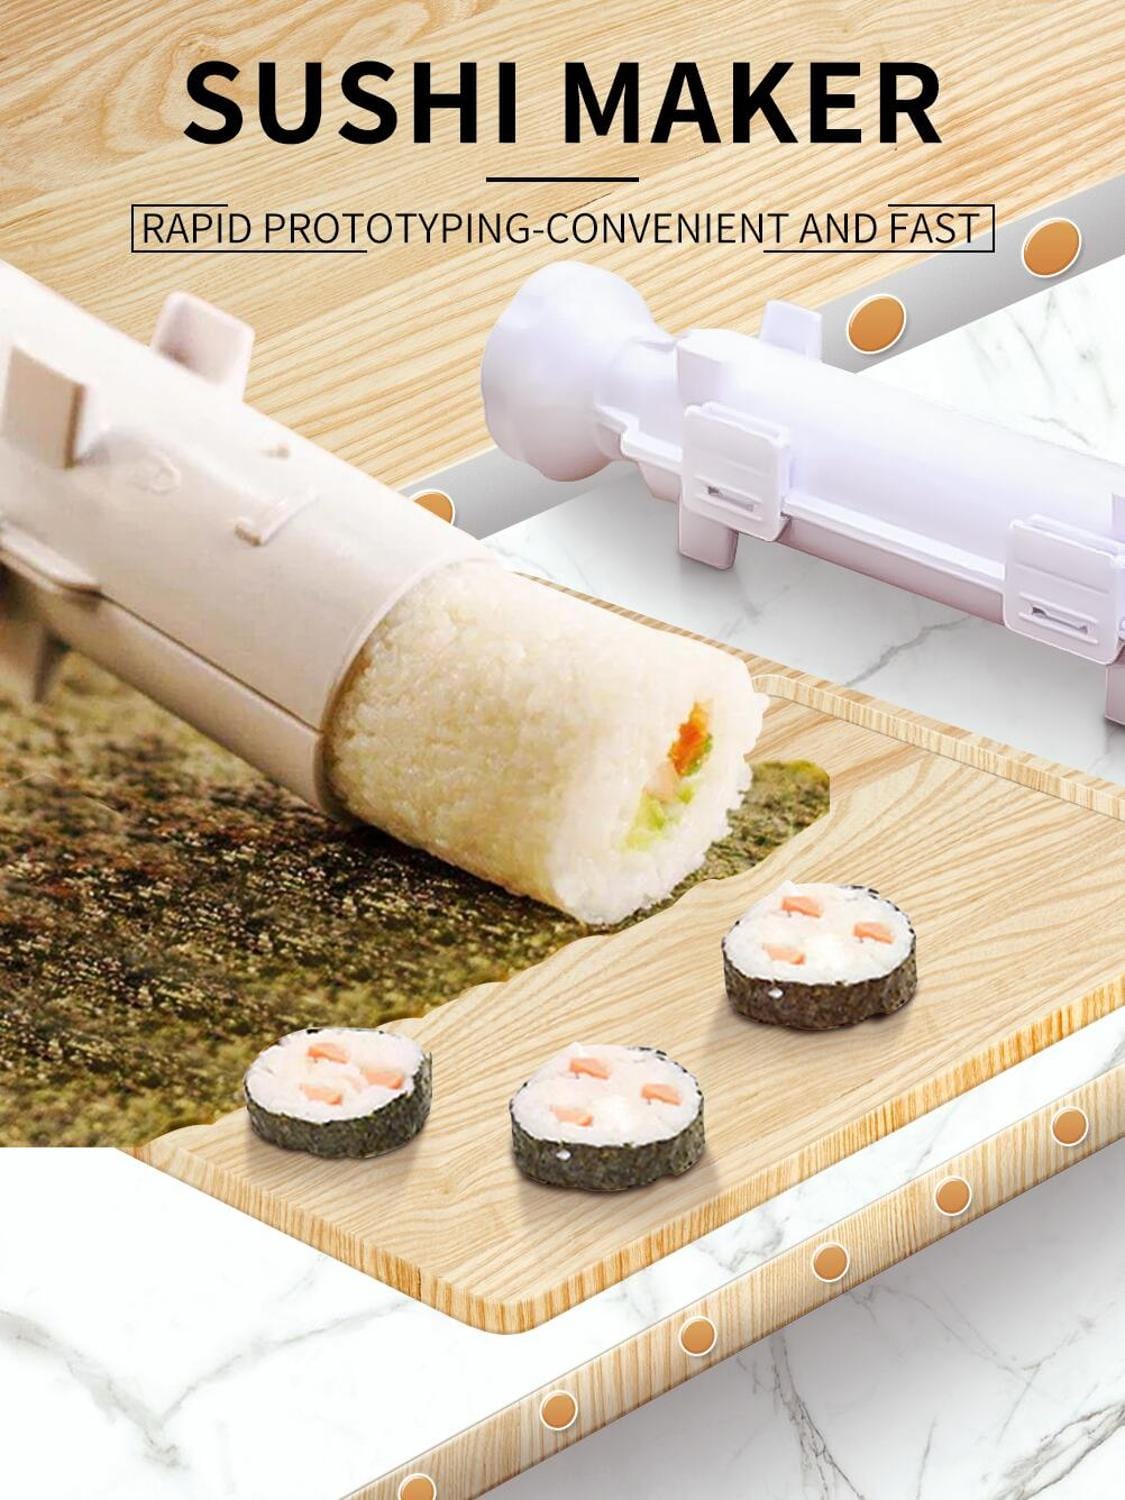 Sushi Maker - GDHH132 - IdeaStage Promotional Products